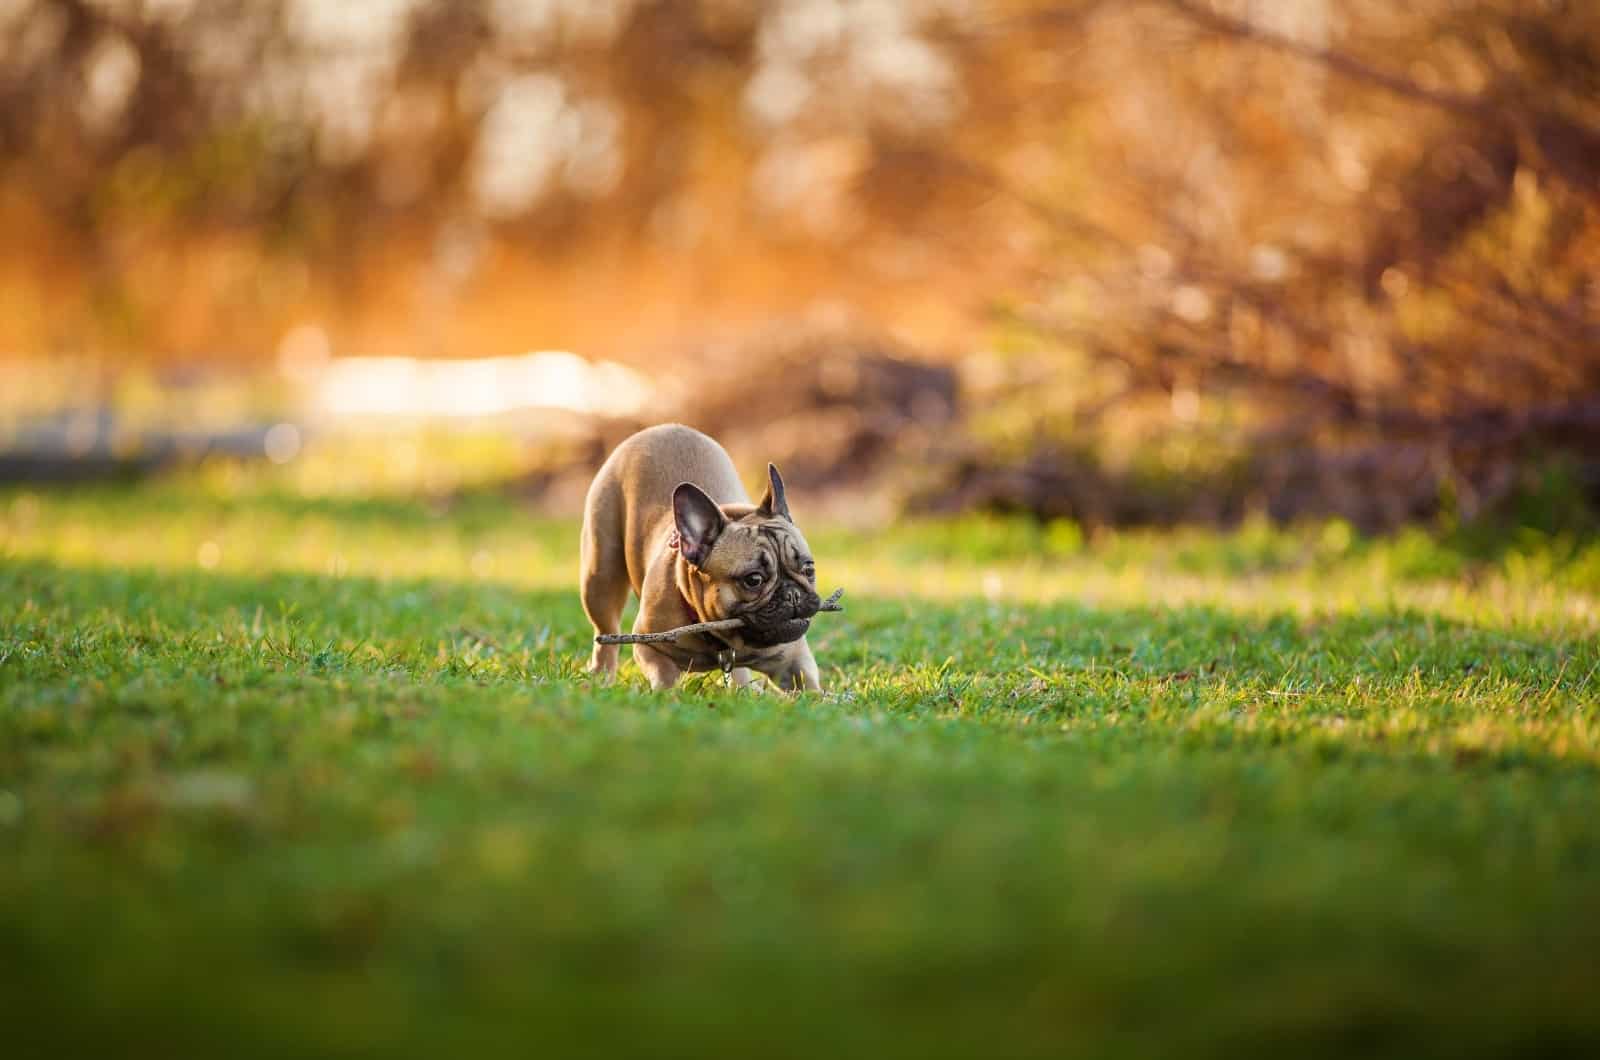 French Bulldog playing on grass